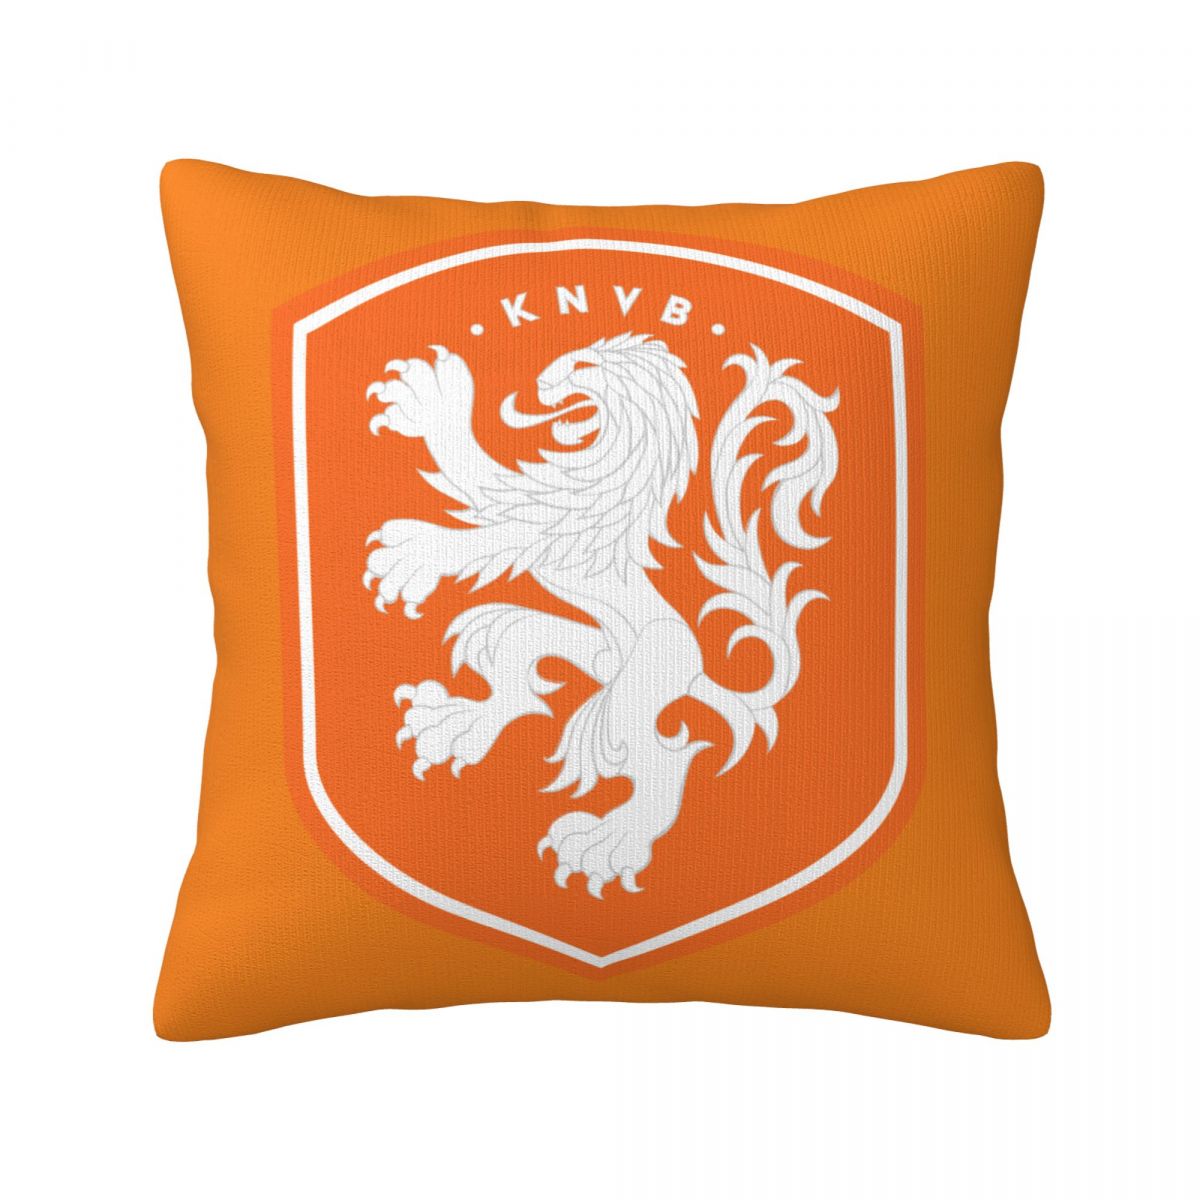 Netherlands National Football Team Throw Pillow Covers 18x18